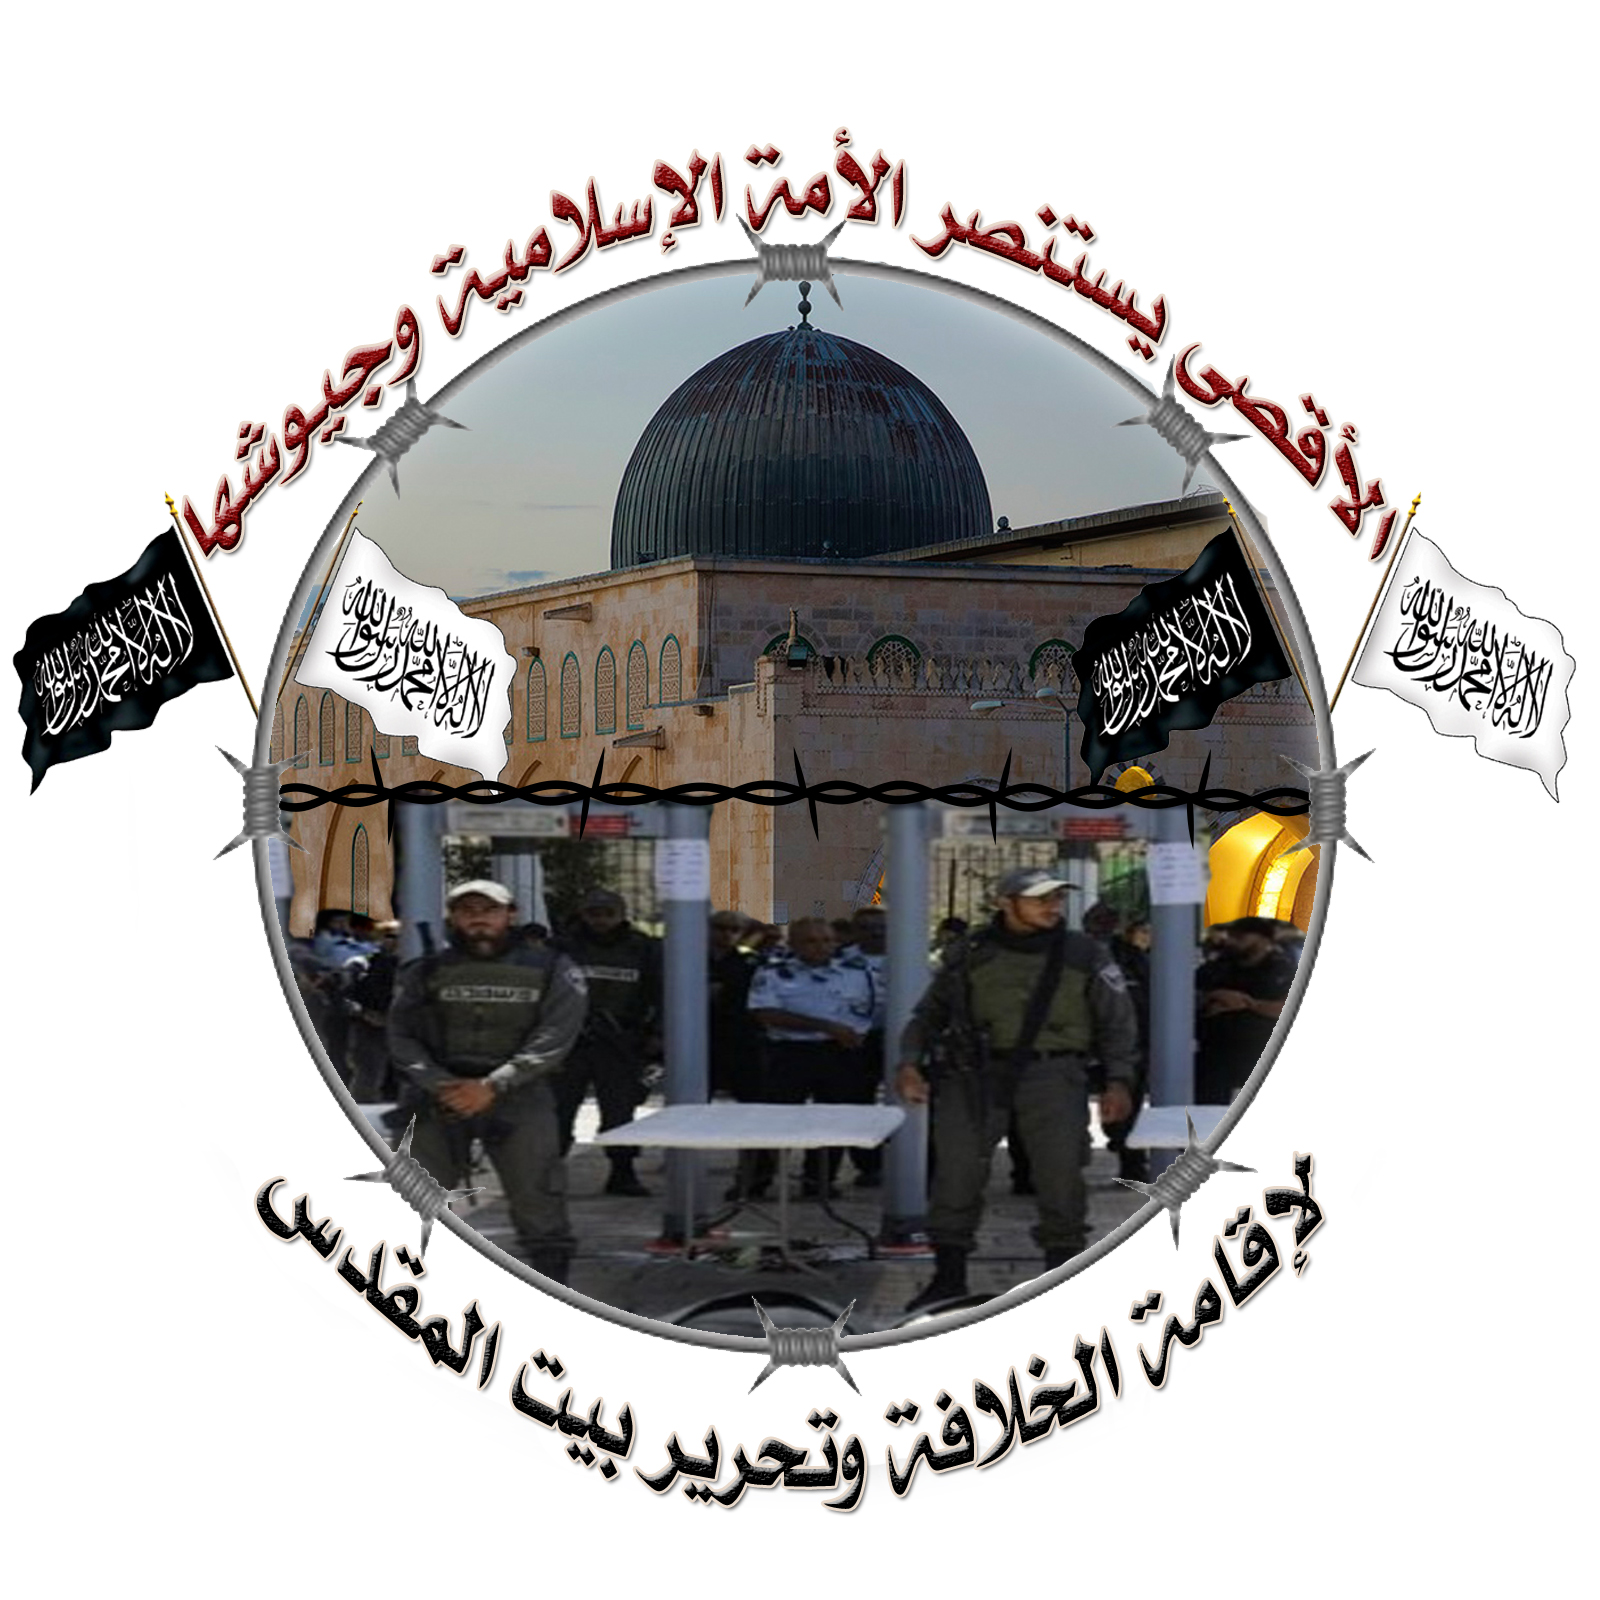 2017 07 Aqsa Logos AR